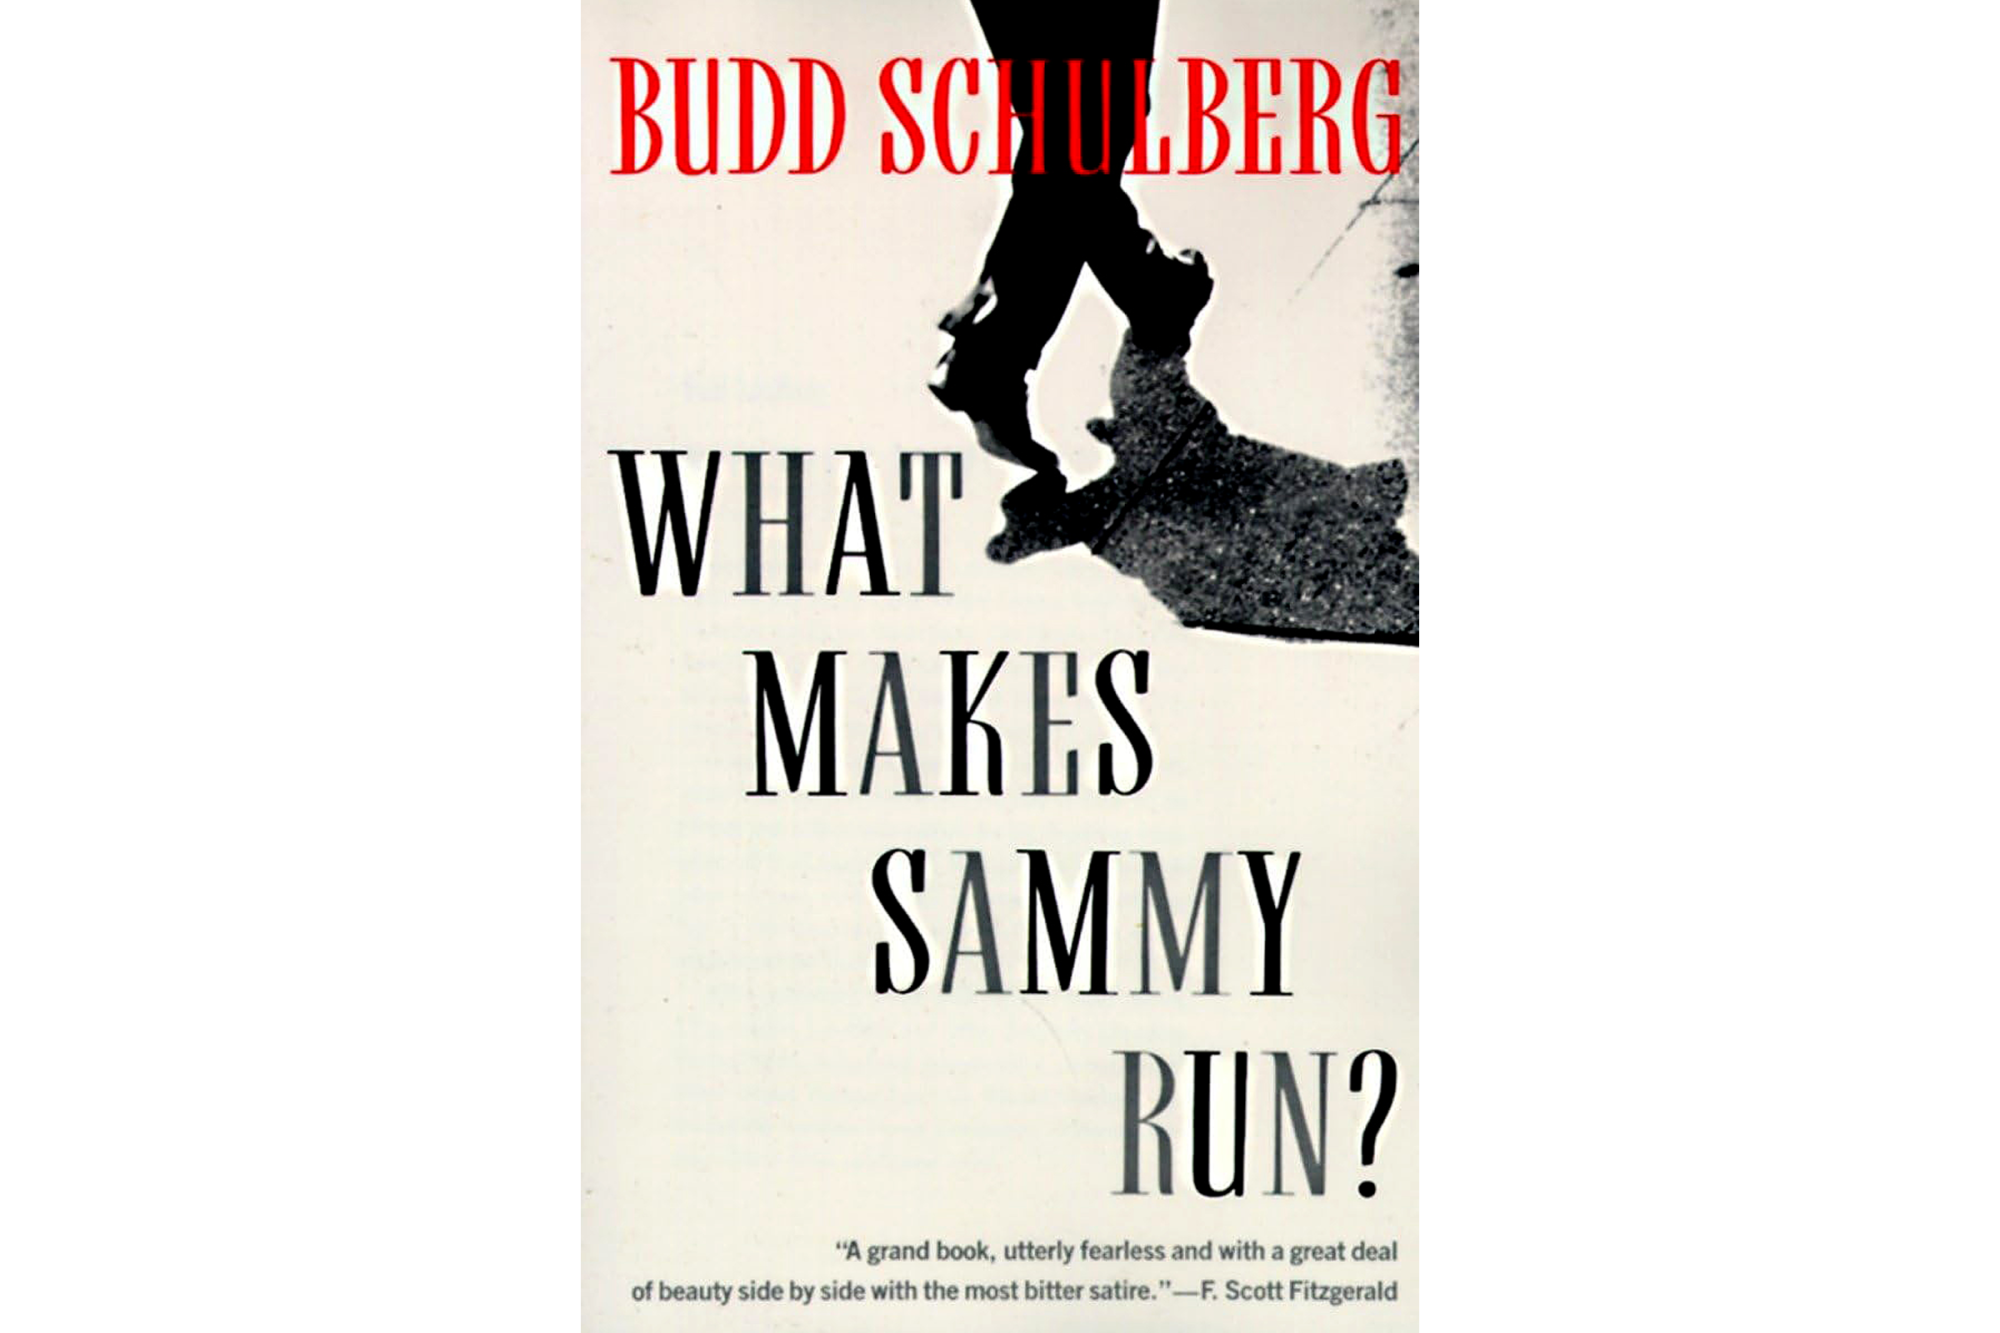 "What Makes Sammy Run?" by Budd Schulberg